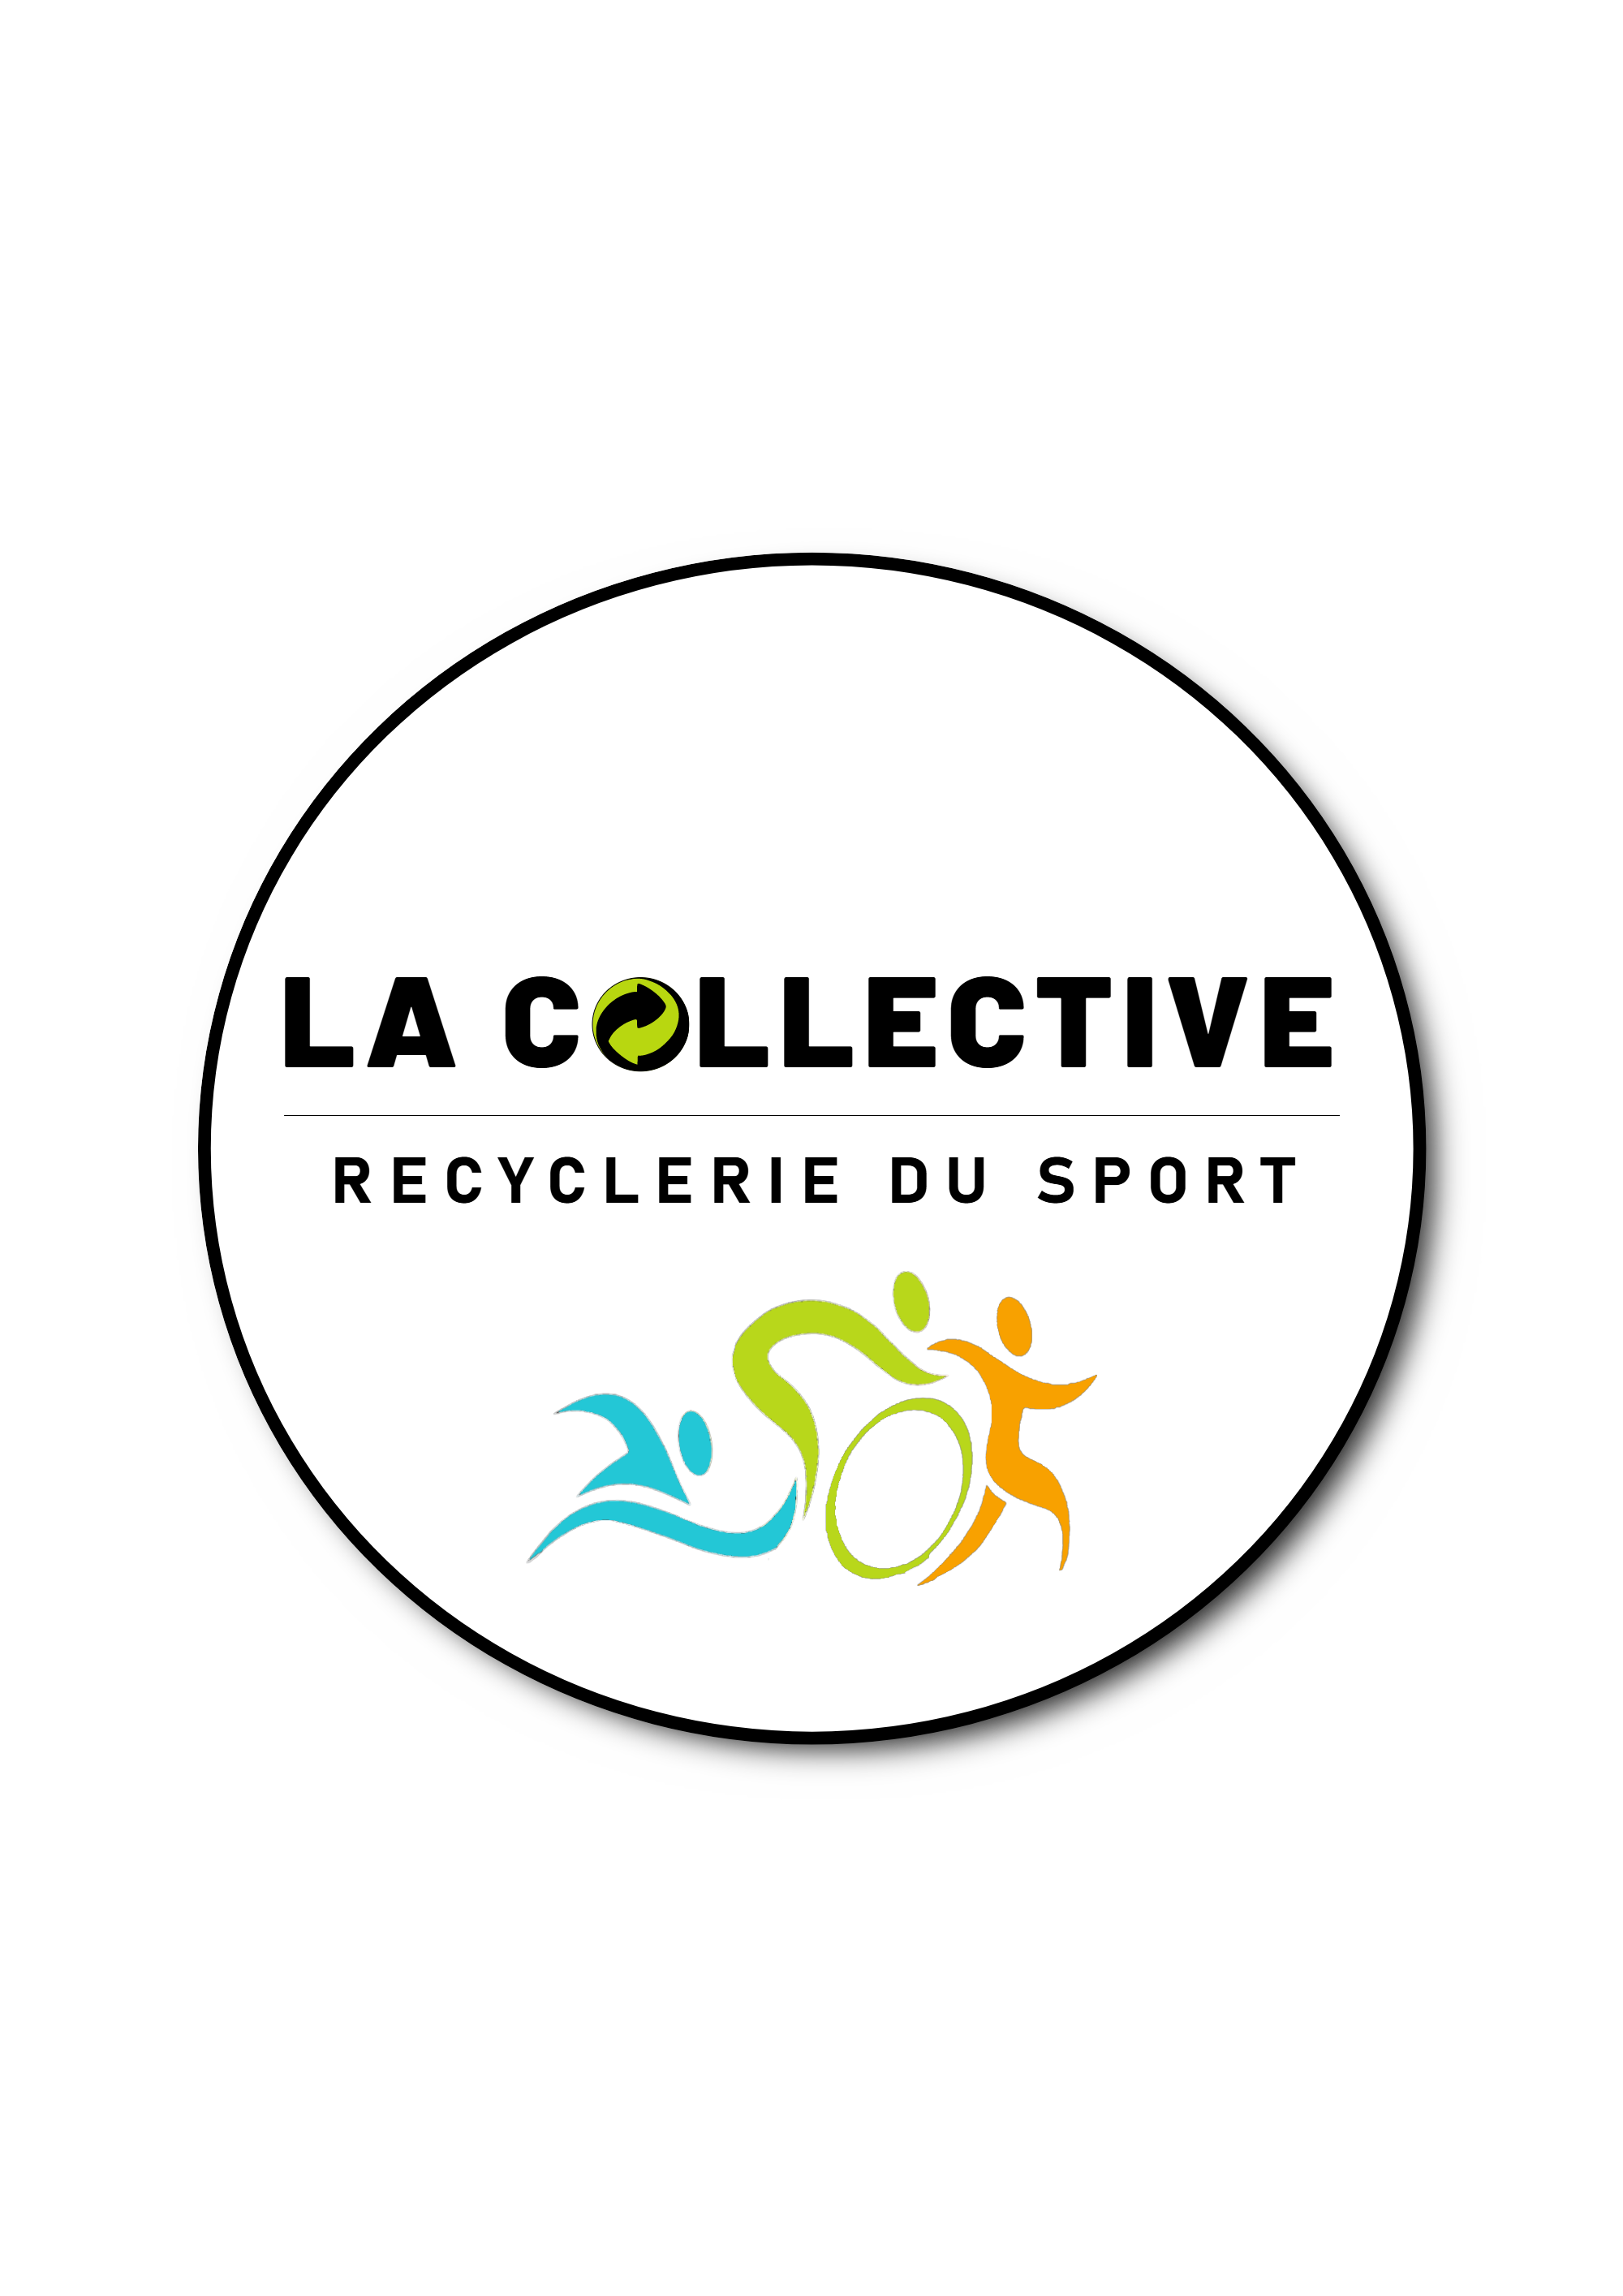 Recyclerie du Sport